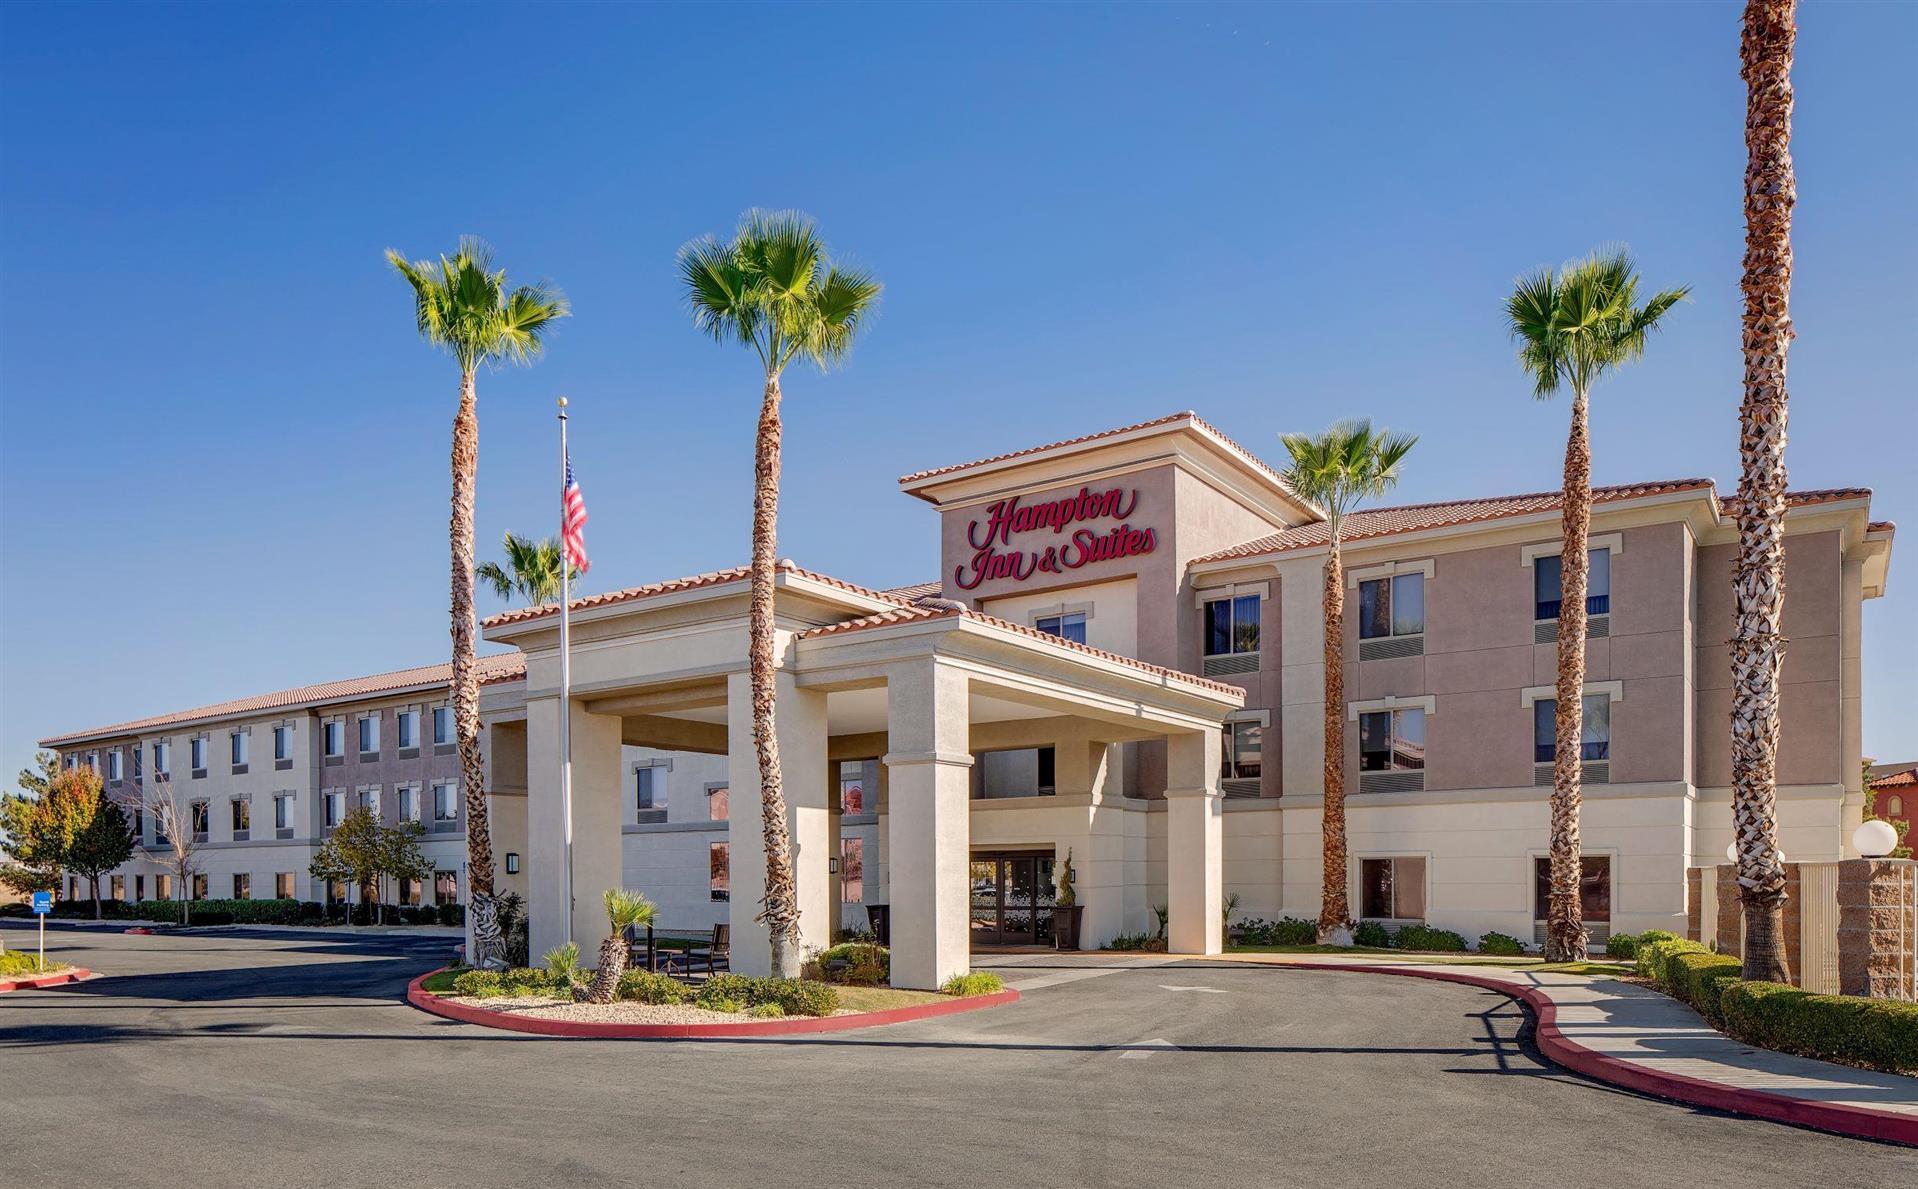 Hampton Inn & Suites Palmdale in Palmdale, CA